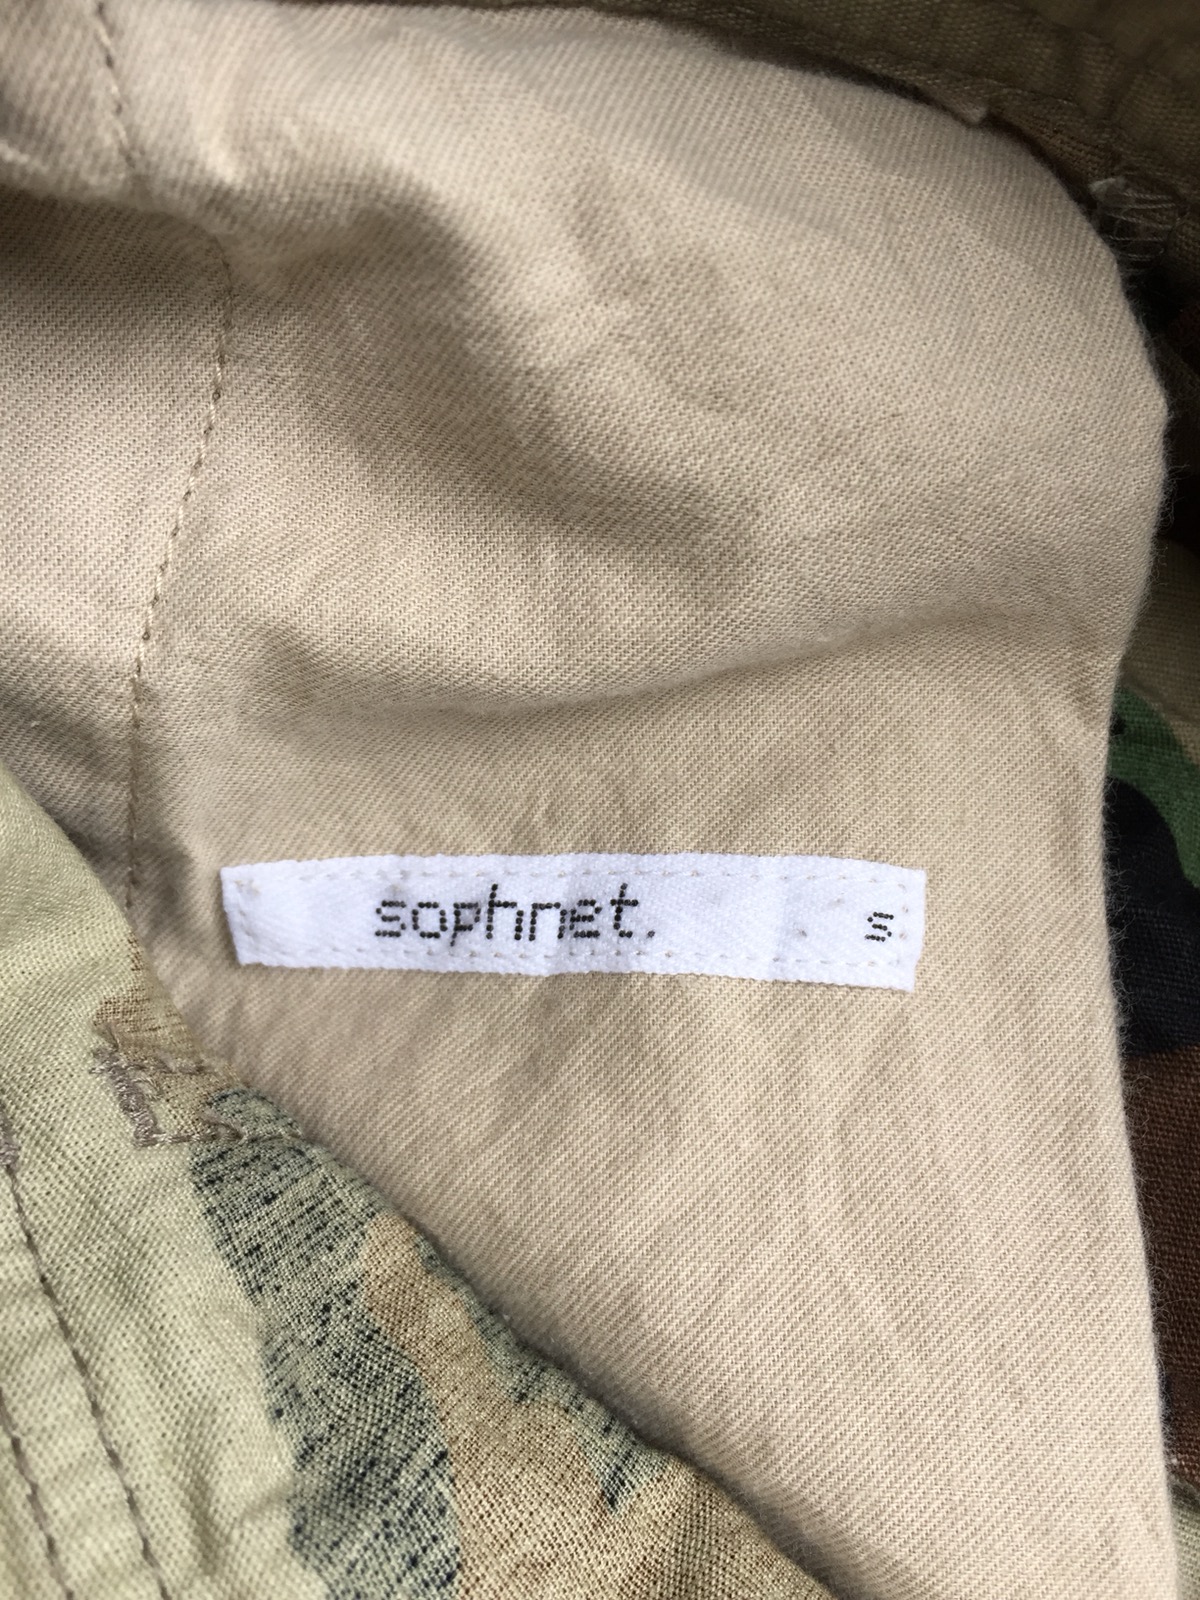 Japanese Brand Sophnet. Tactical Pants Kapital Style - 13